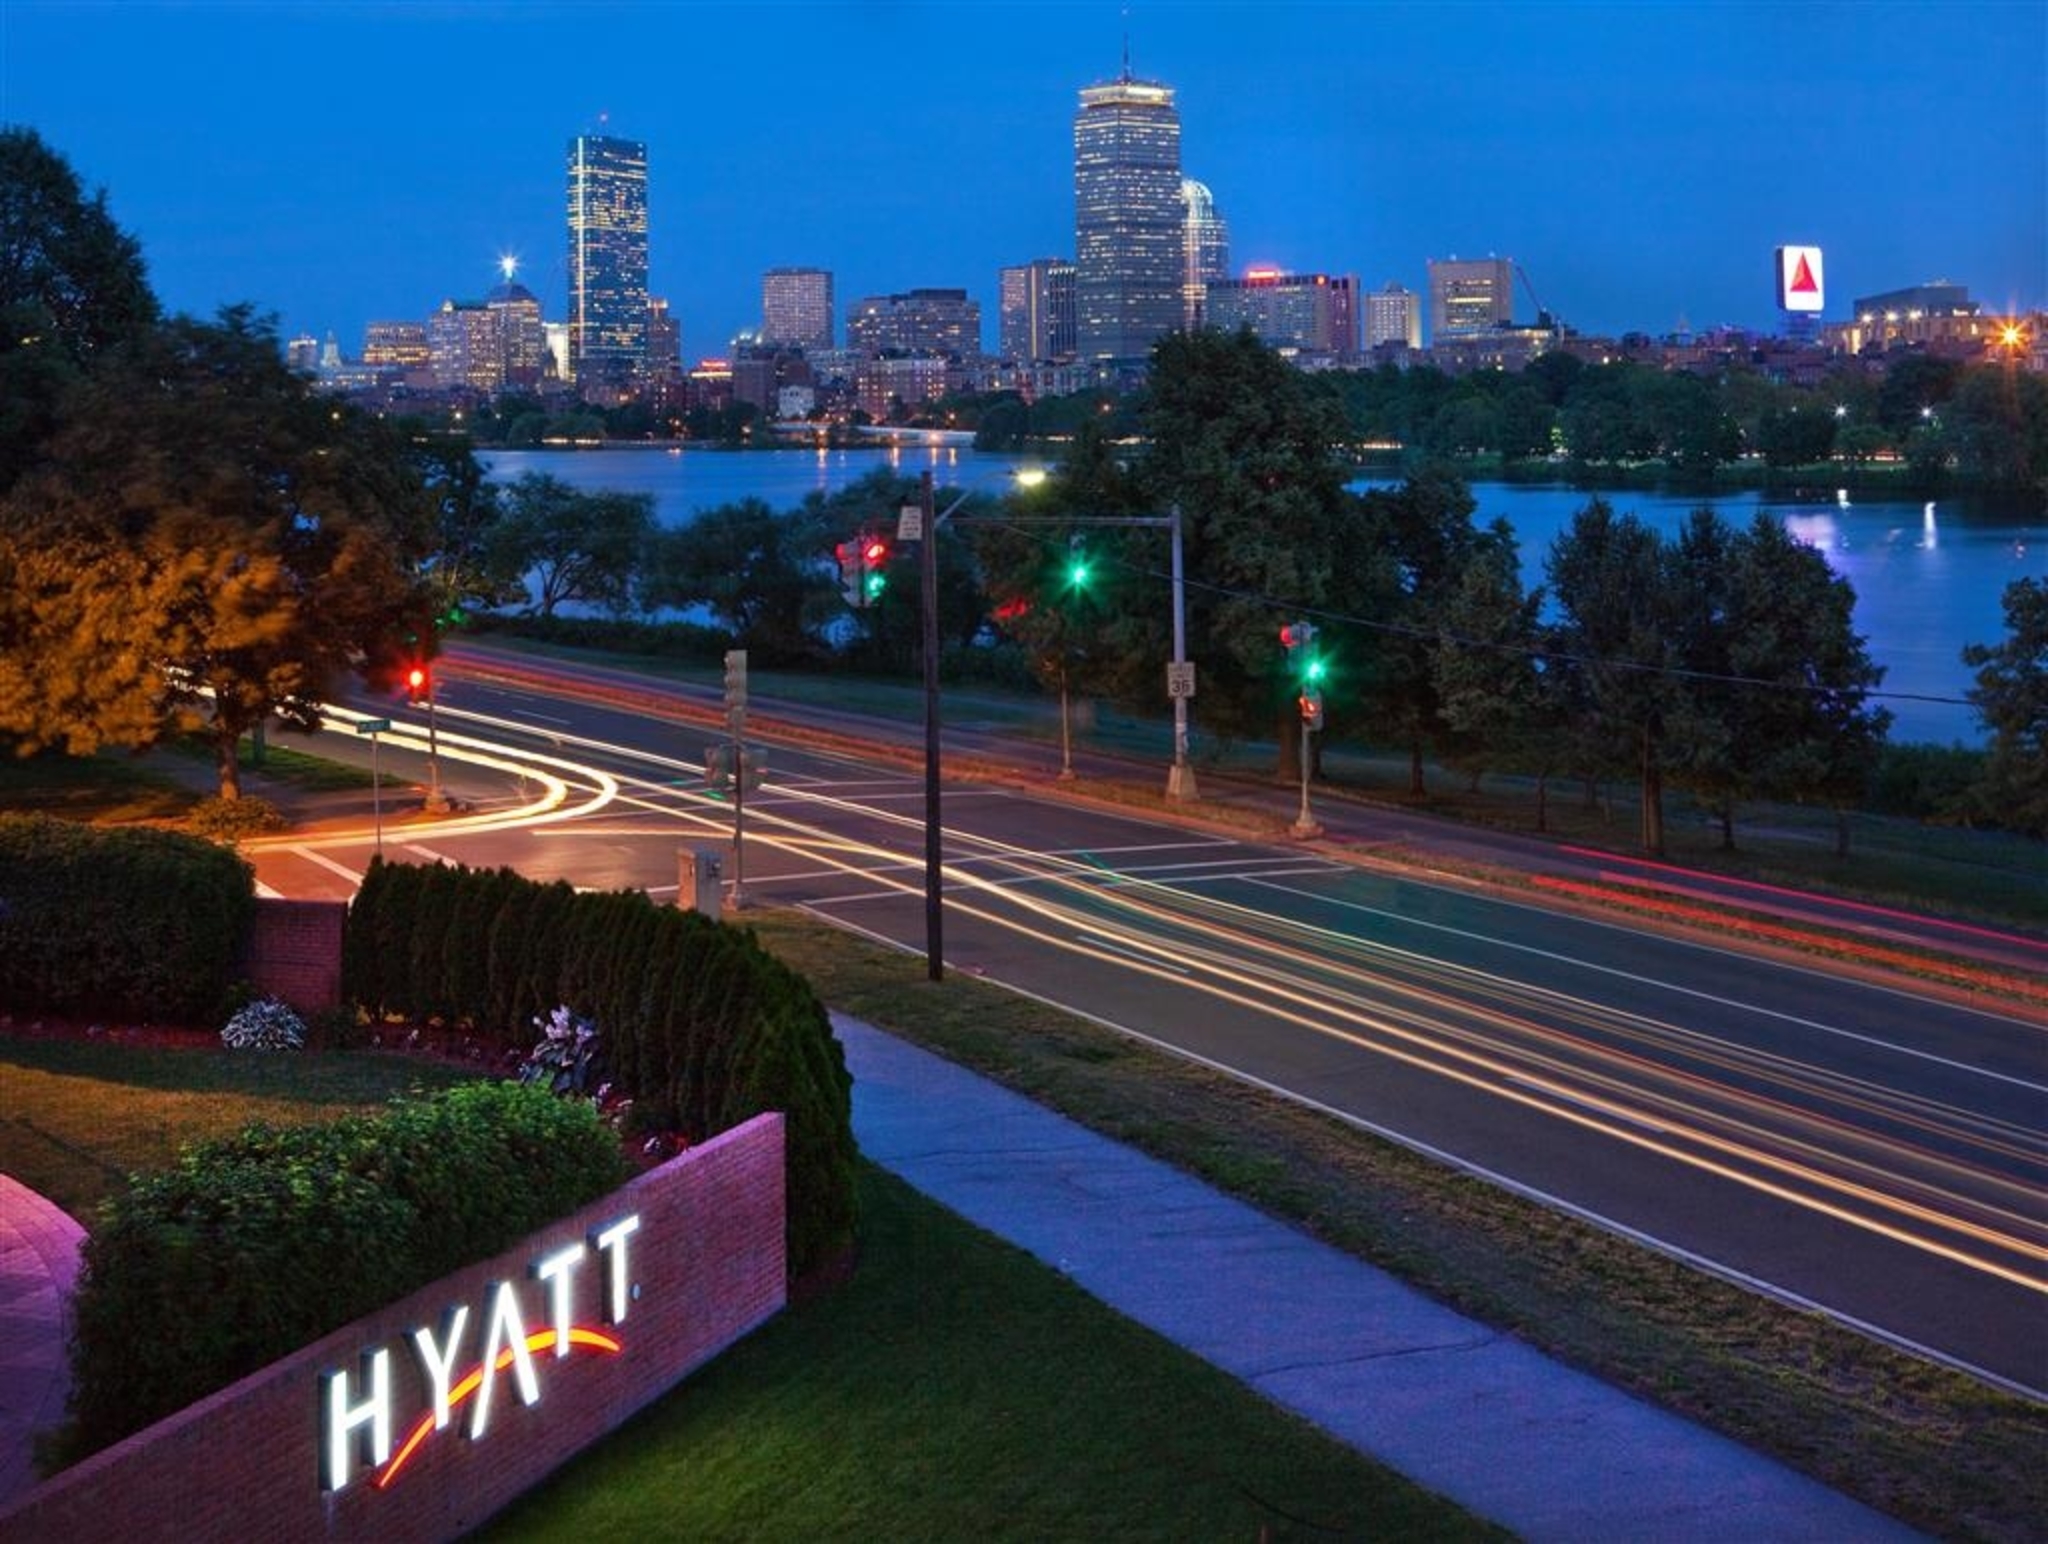 Hyatt Regency Boston / Cambridge